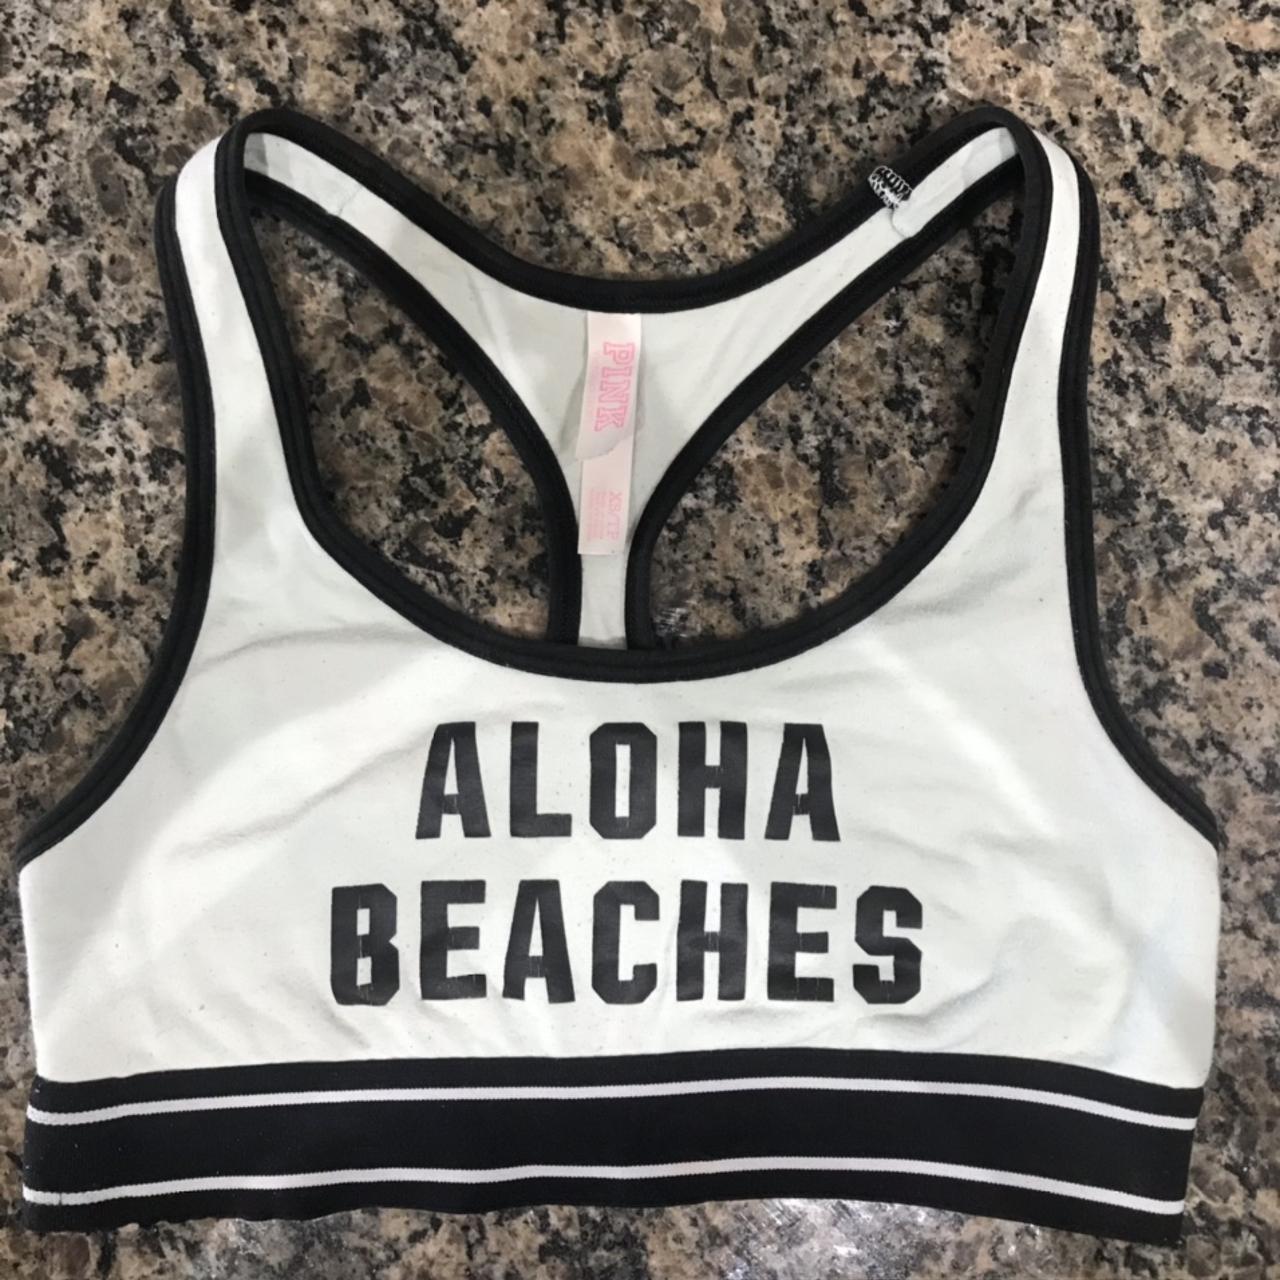 Victoria secret PINK Sports bra ALOHA BEACHES - Depop